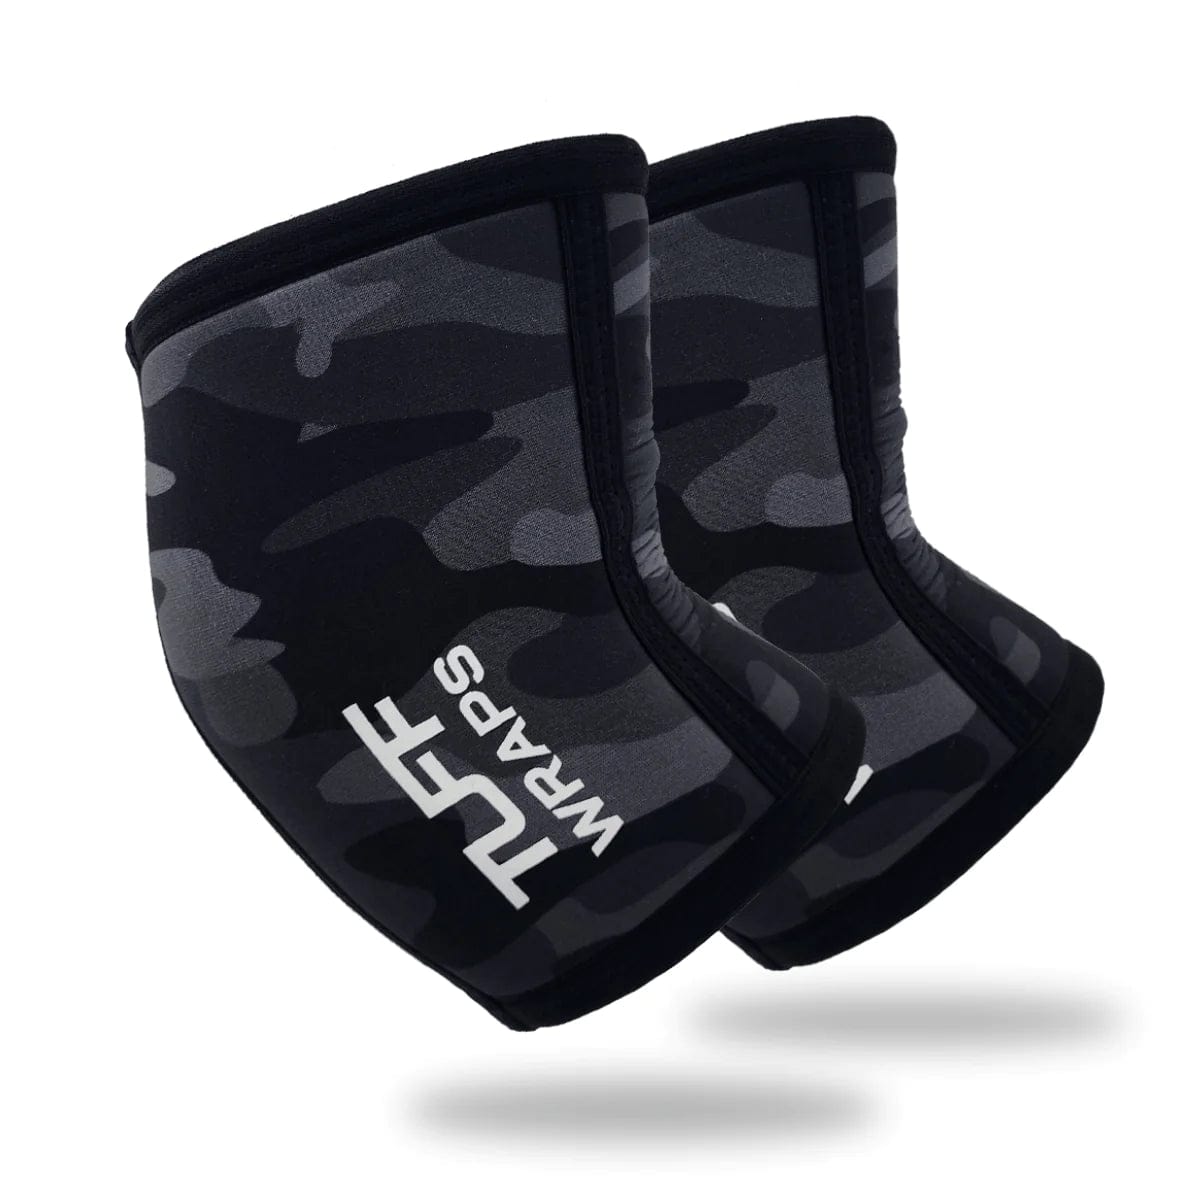 TUFF Power Series 7mm Elbow Sleeves (Black Camo) Elbow Sleeves